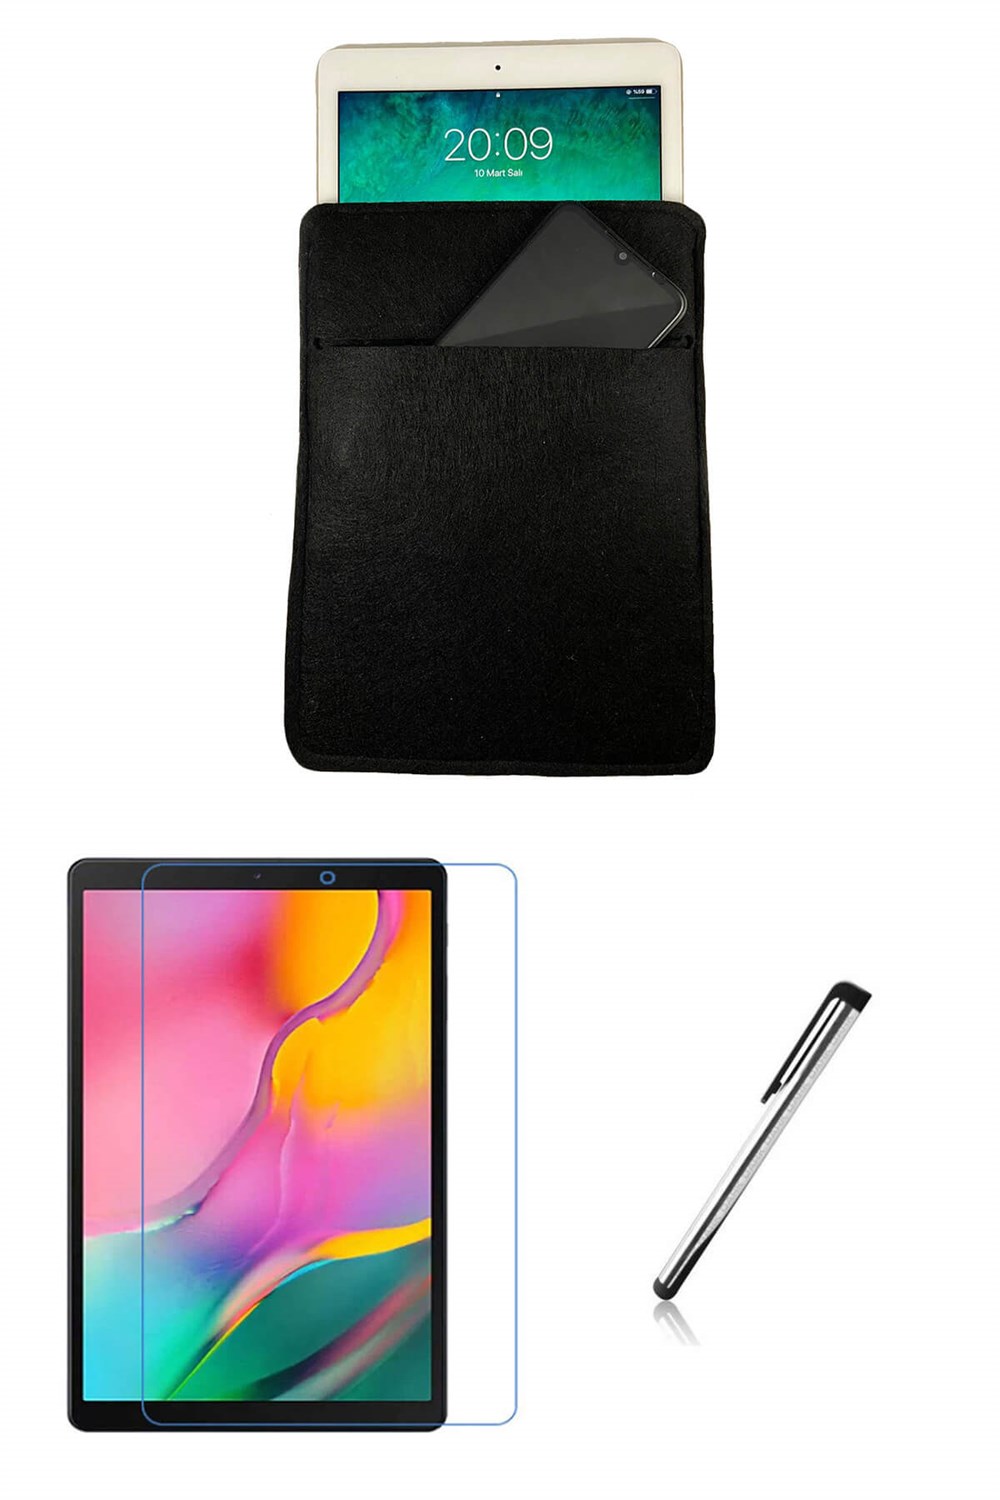 Samsung Galaxy Tab A SM-T290 8 inç Özel Tasarım Tablet Kılıfı Seti I  Esepetim.com